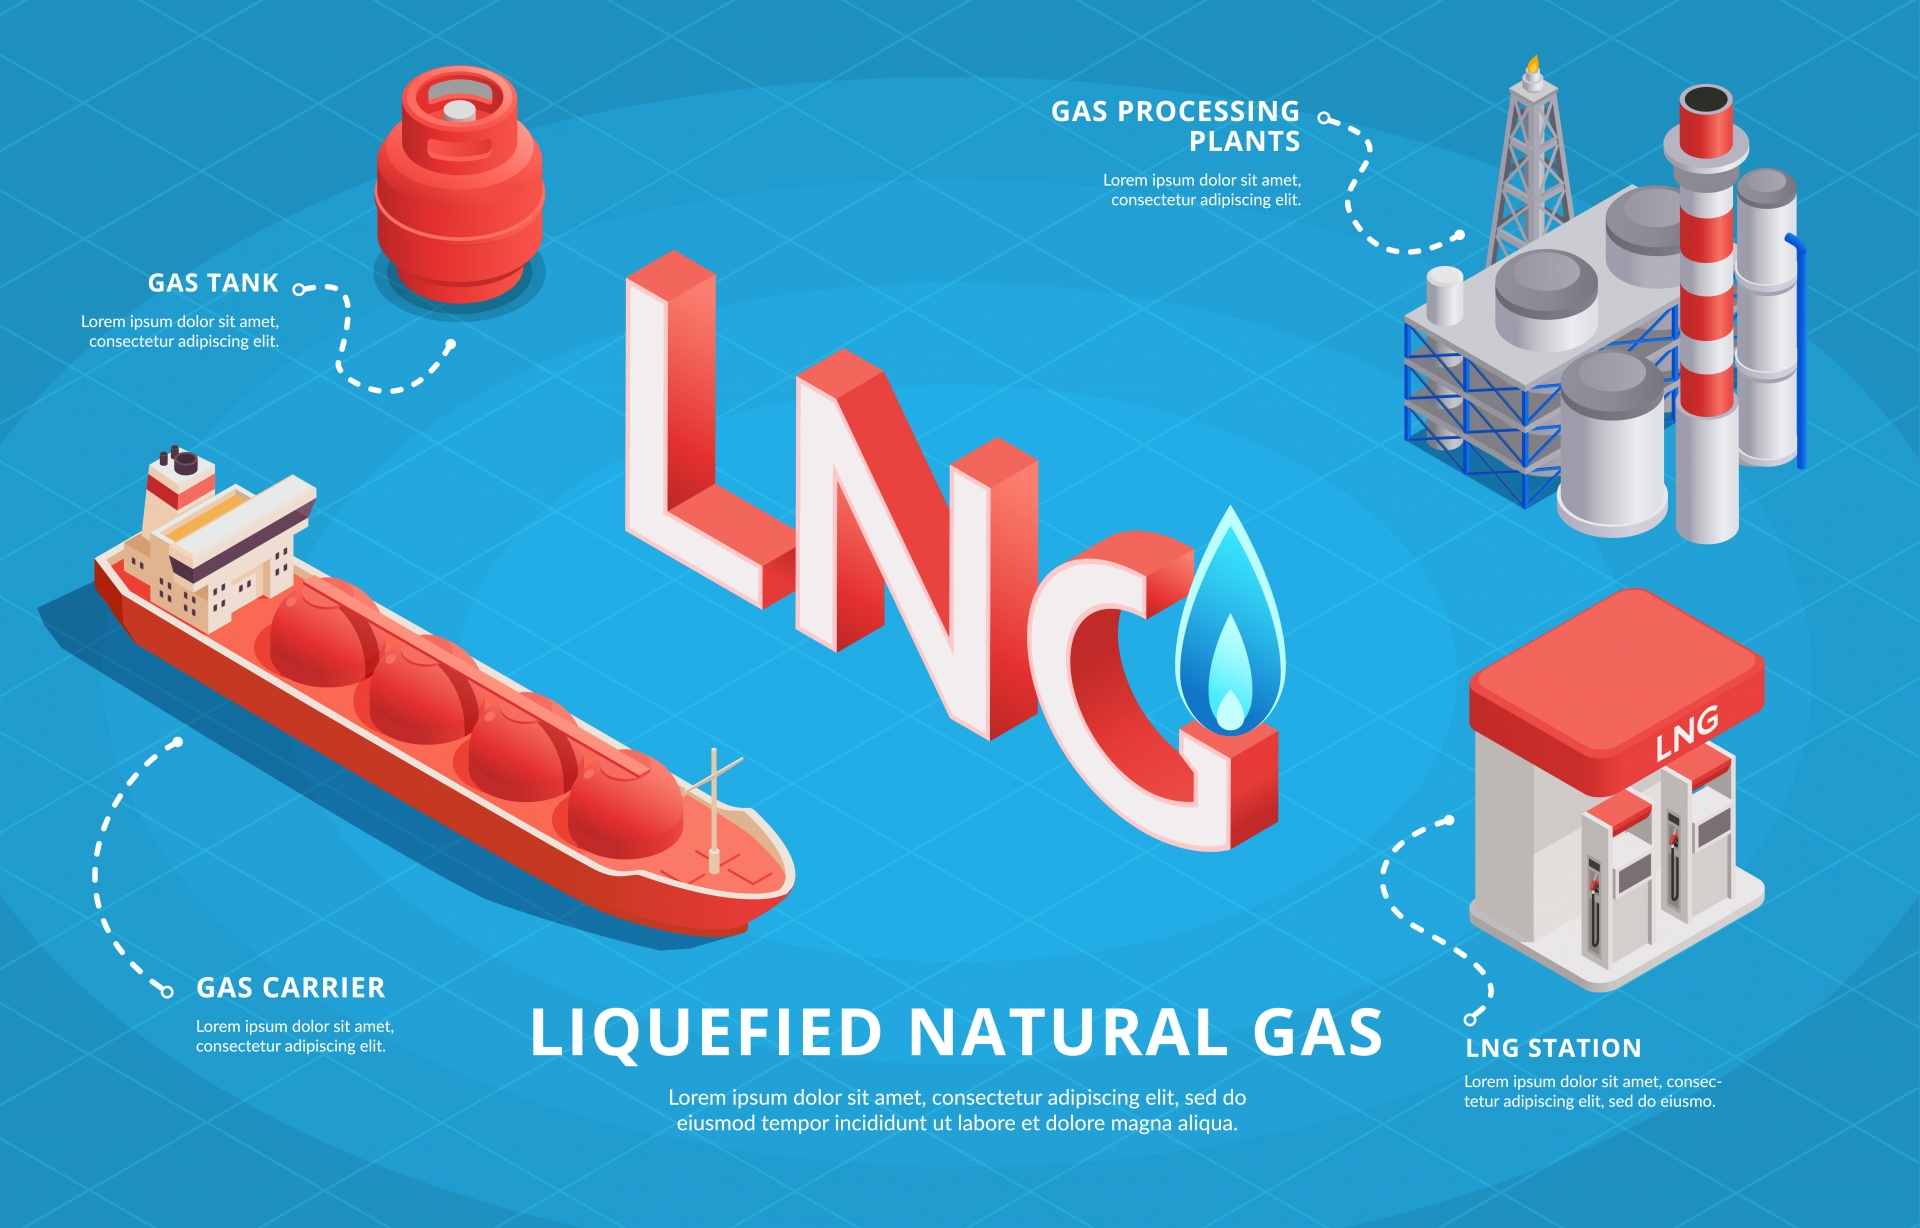 Vietnam’s LNG power projects face regulatory hurdles despite high hopes